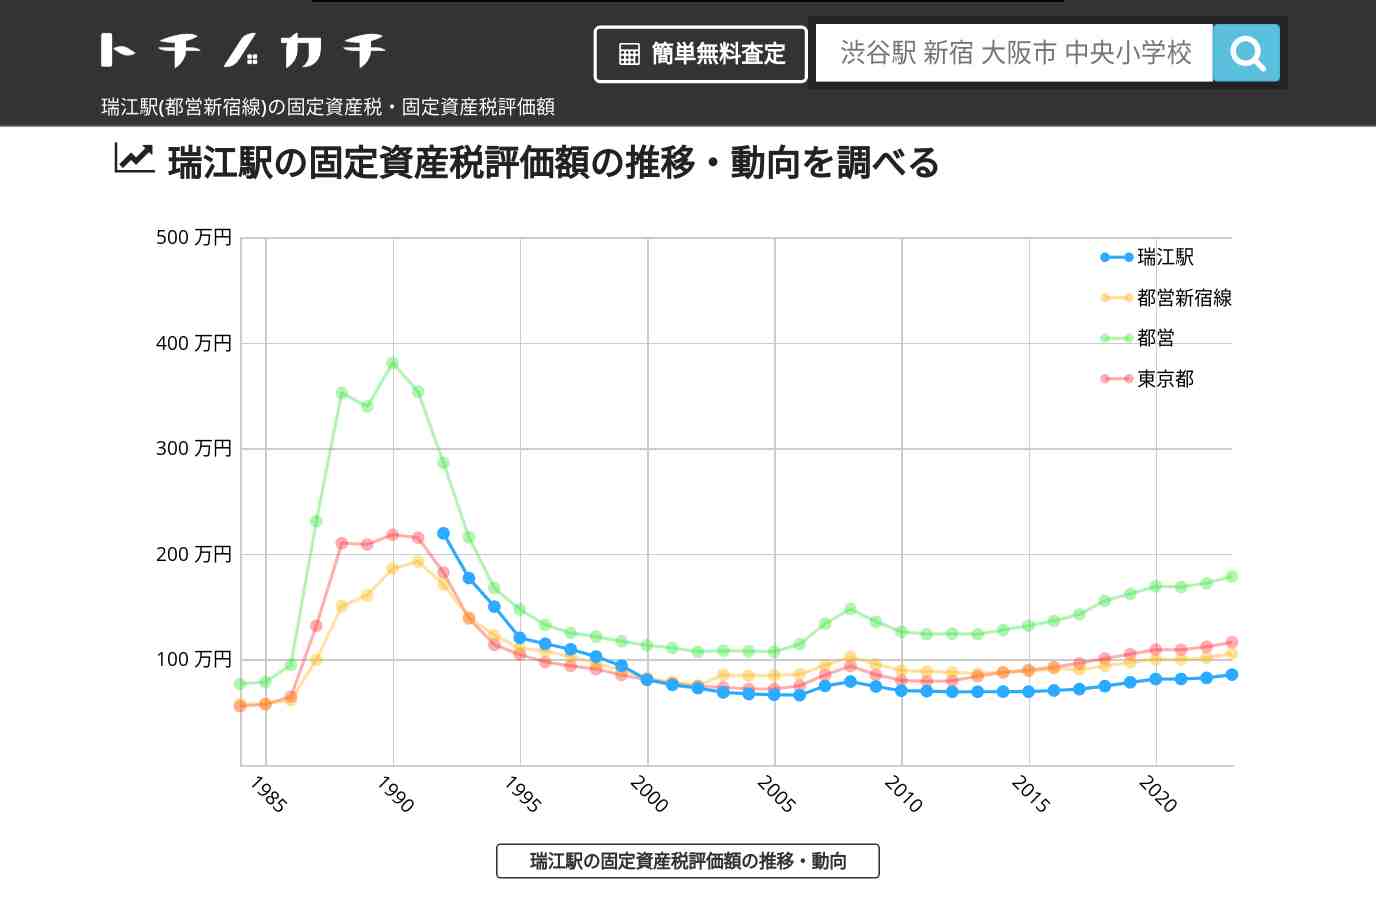 瑞江駅(都営新宿線)の固定資産税・固定資産税評価額 | トチノカチ